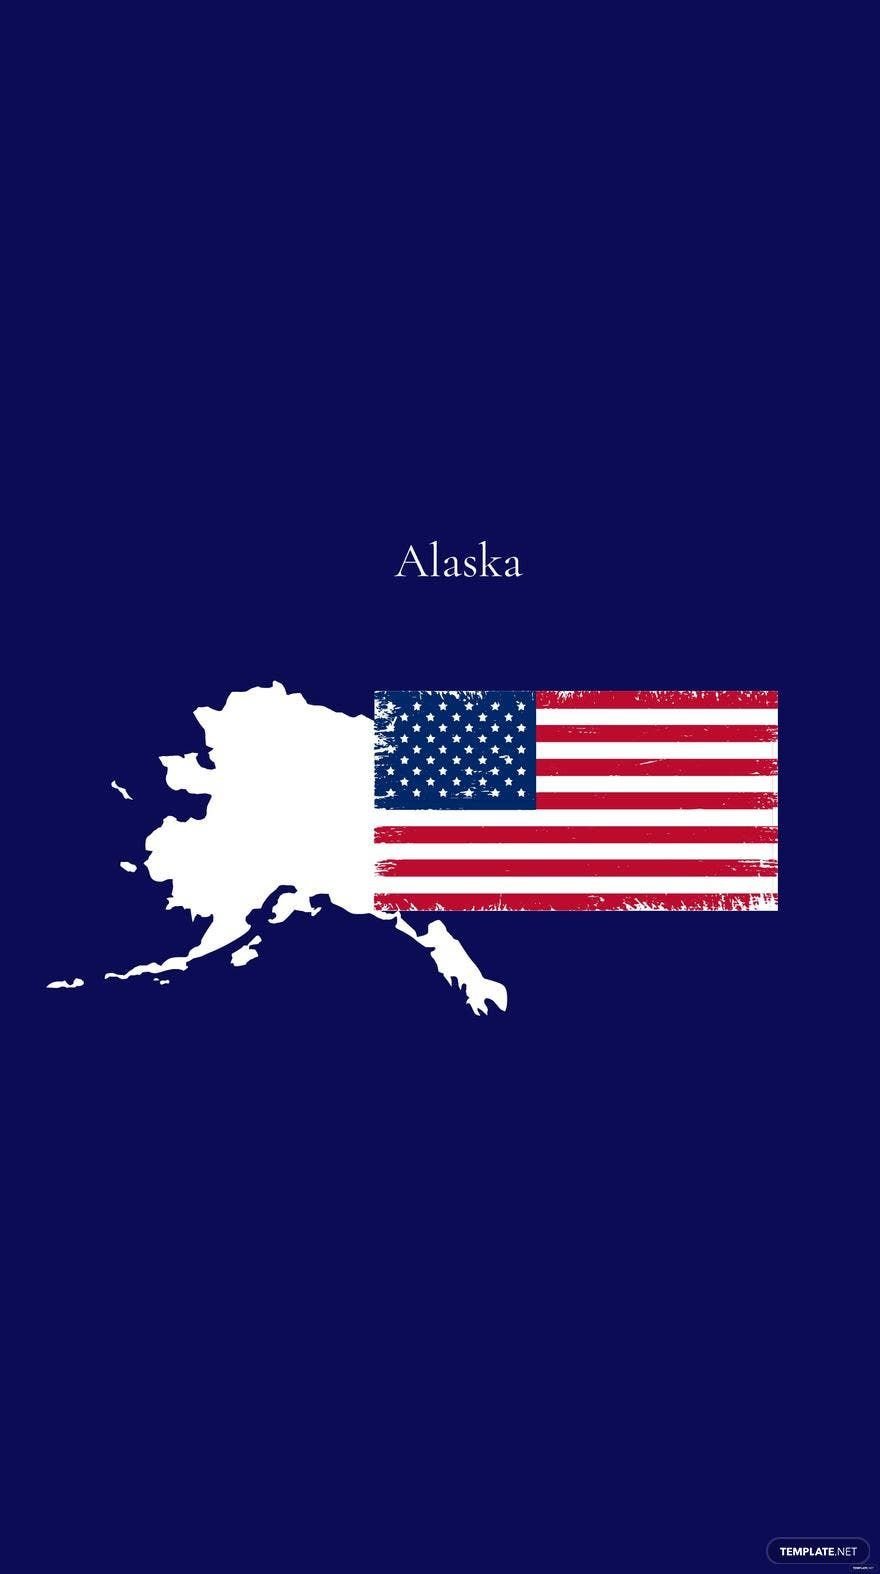 Free Alaska Day iPhone Background in PDF, Illustrator, PSD, EPS, SVG, JPG, PNG